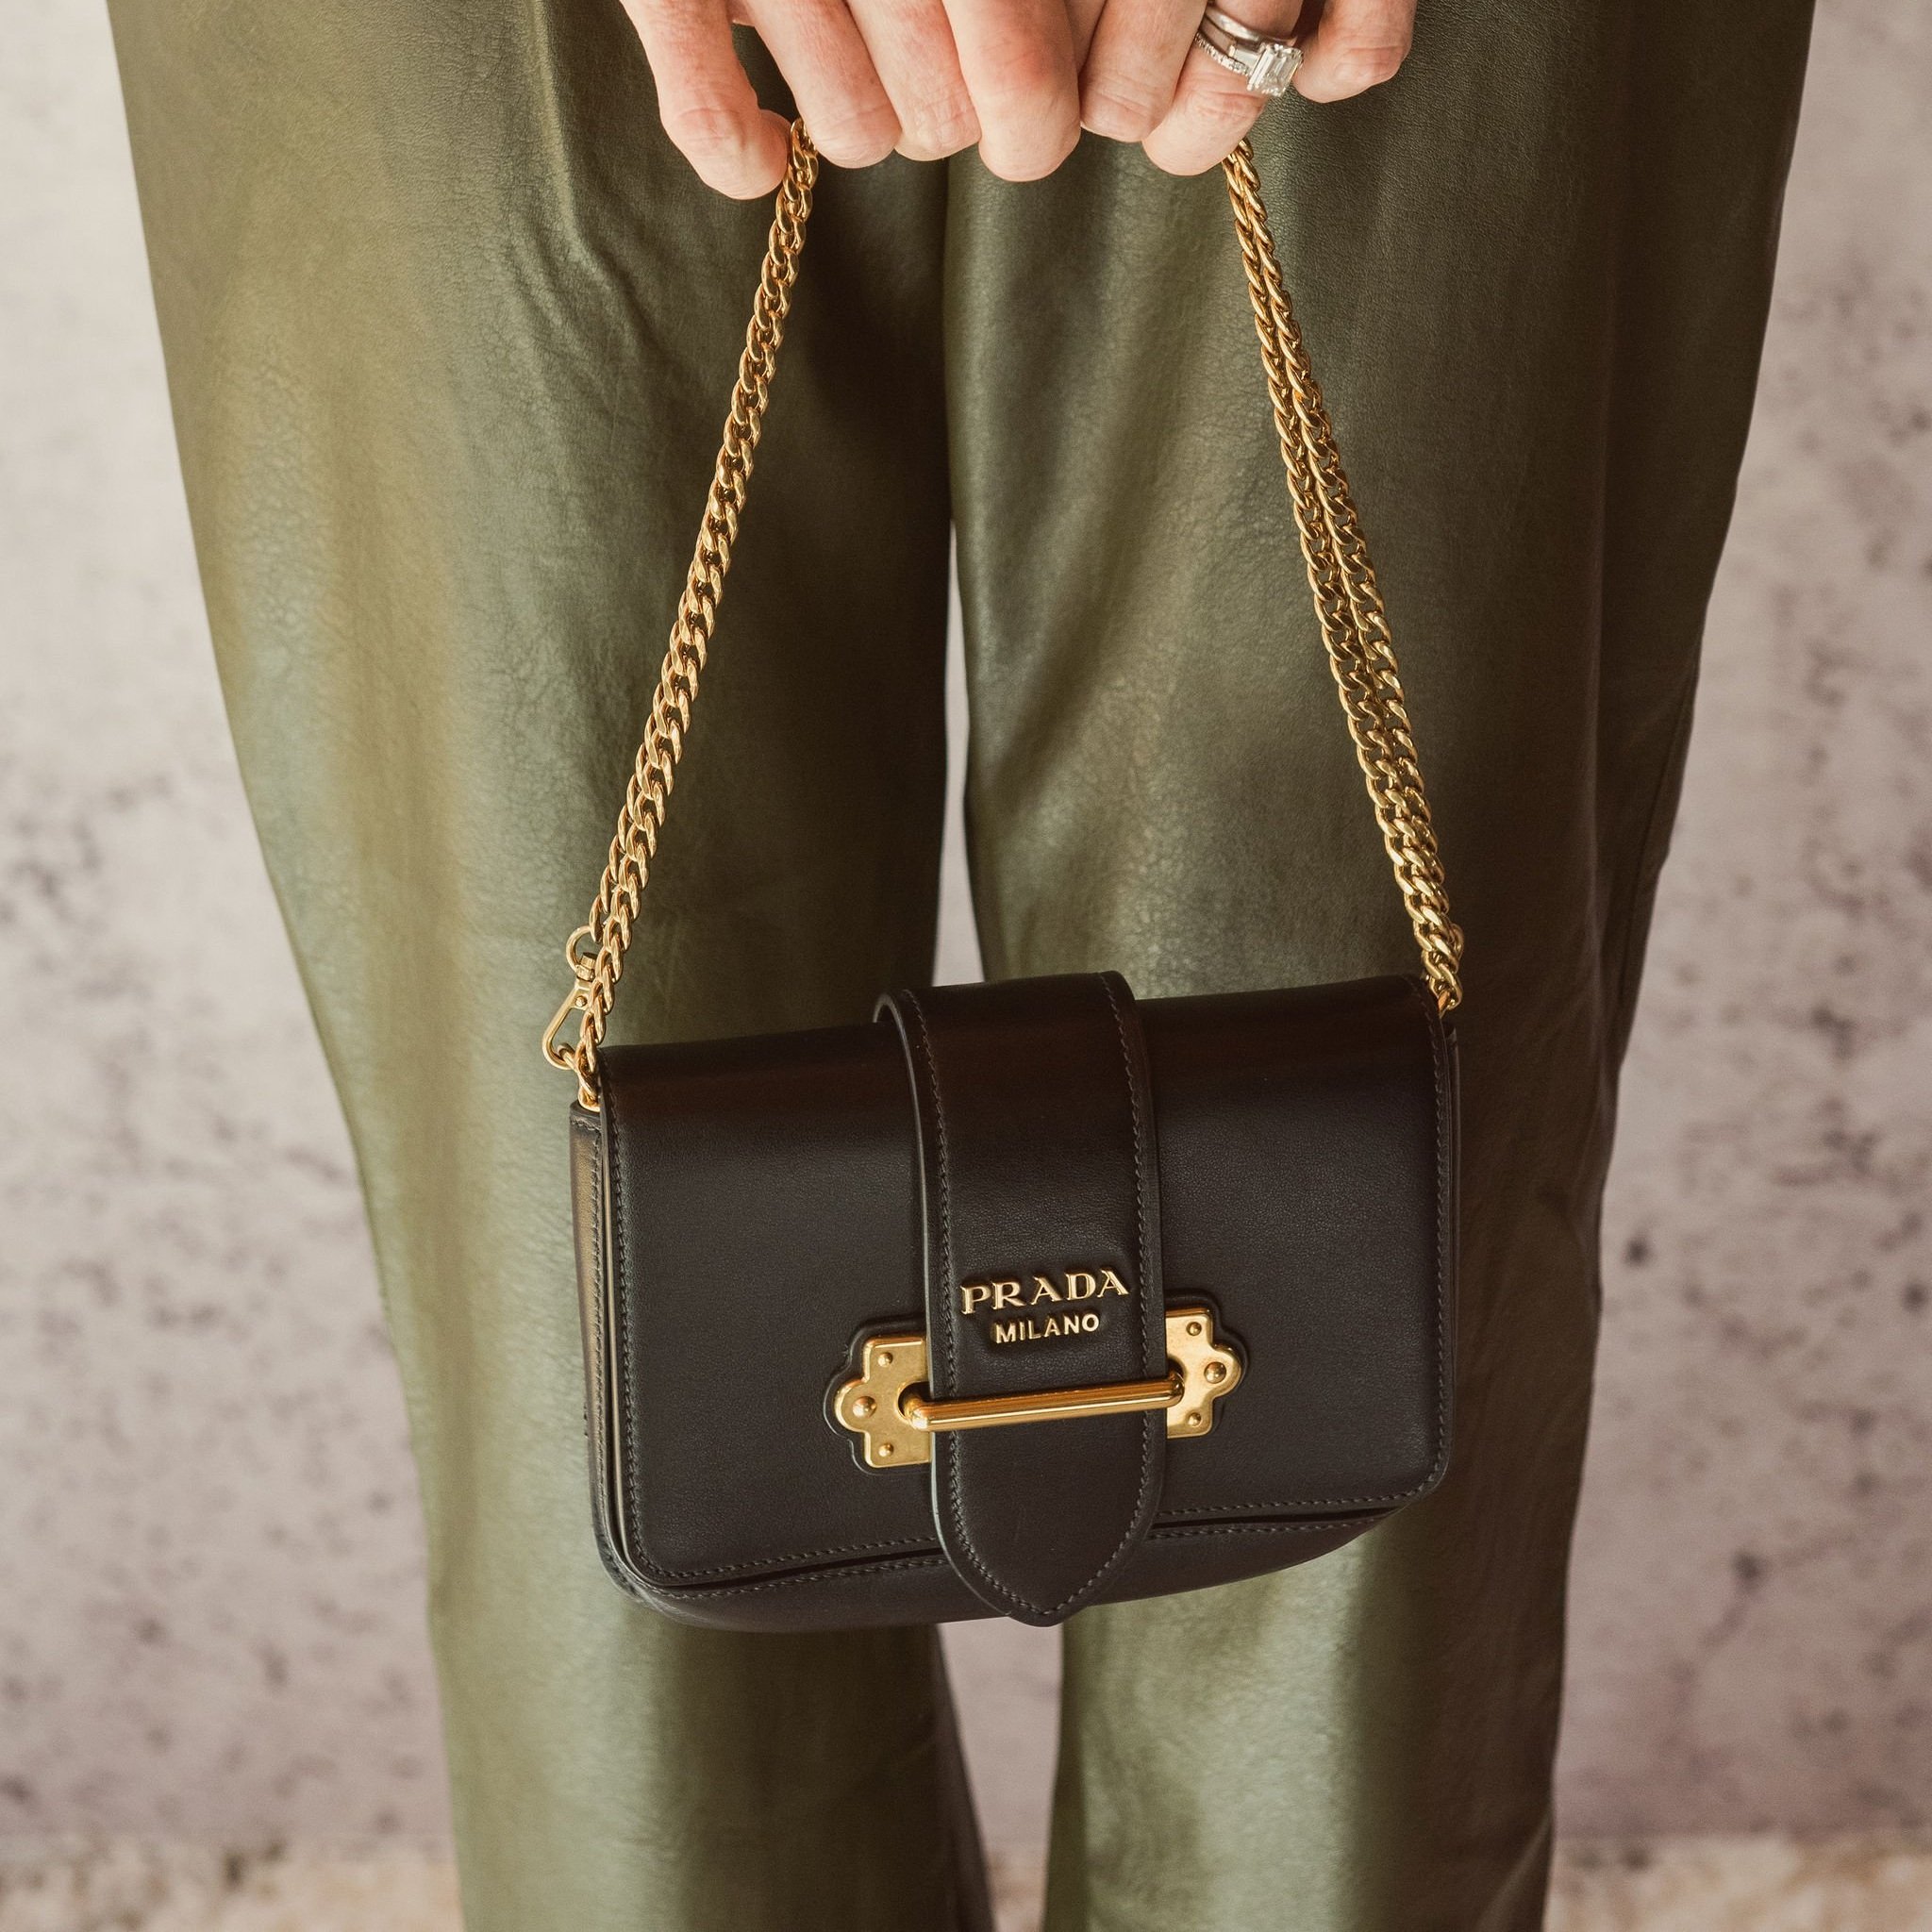 Black Prada purse with gold chain strap.